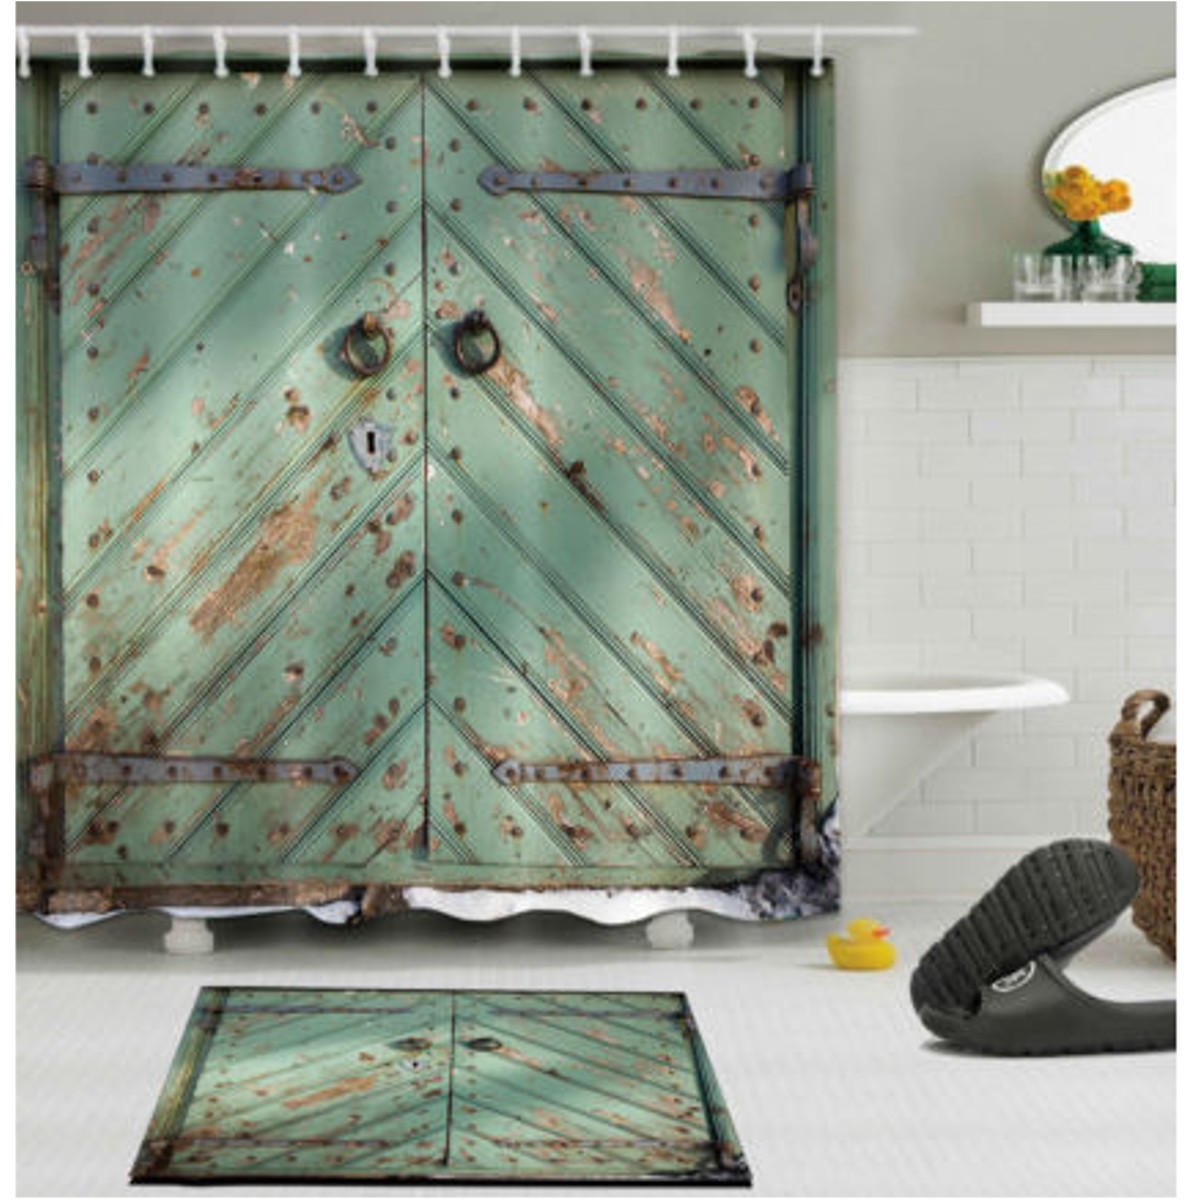 

180cm x 180cm Деревянная деревянная дверь сарая Ванная комната Водонепроницаемы Ткань занавески для душа Flannel Ванная